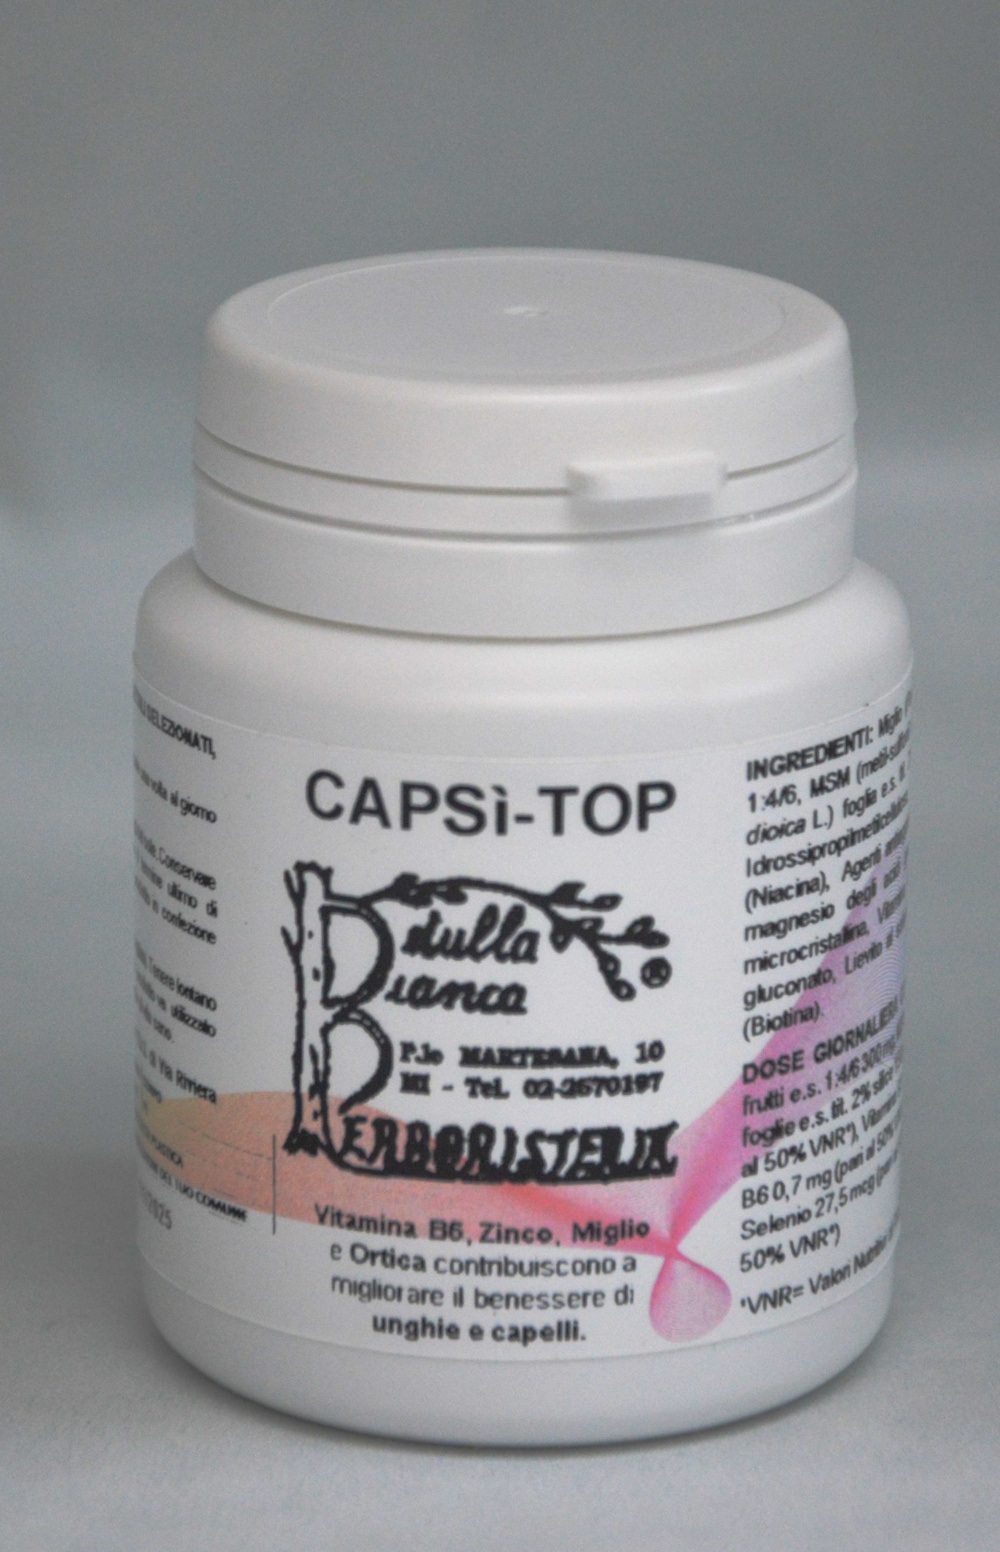 Capsi-top capsule